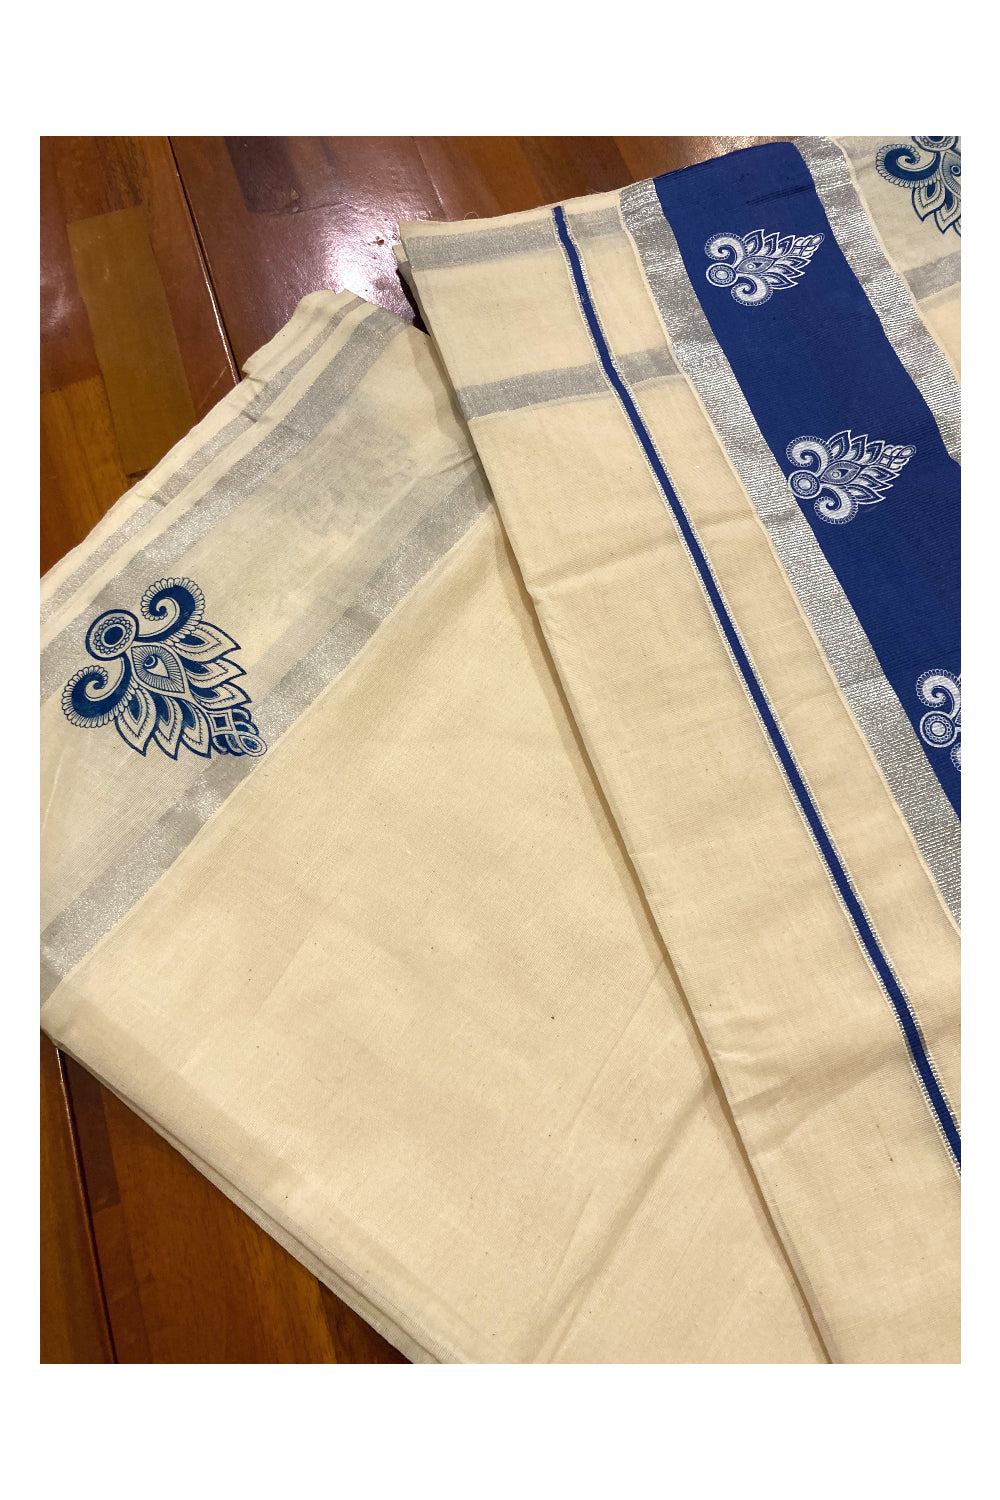 Pure Cotton Kerala Silver Kasavu Saree with White Block Prints in Blue Pallu